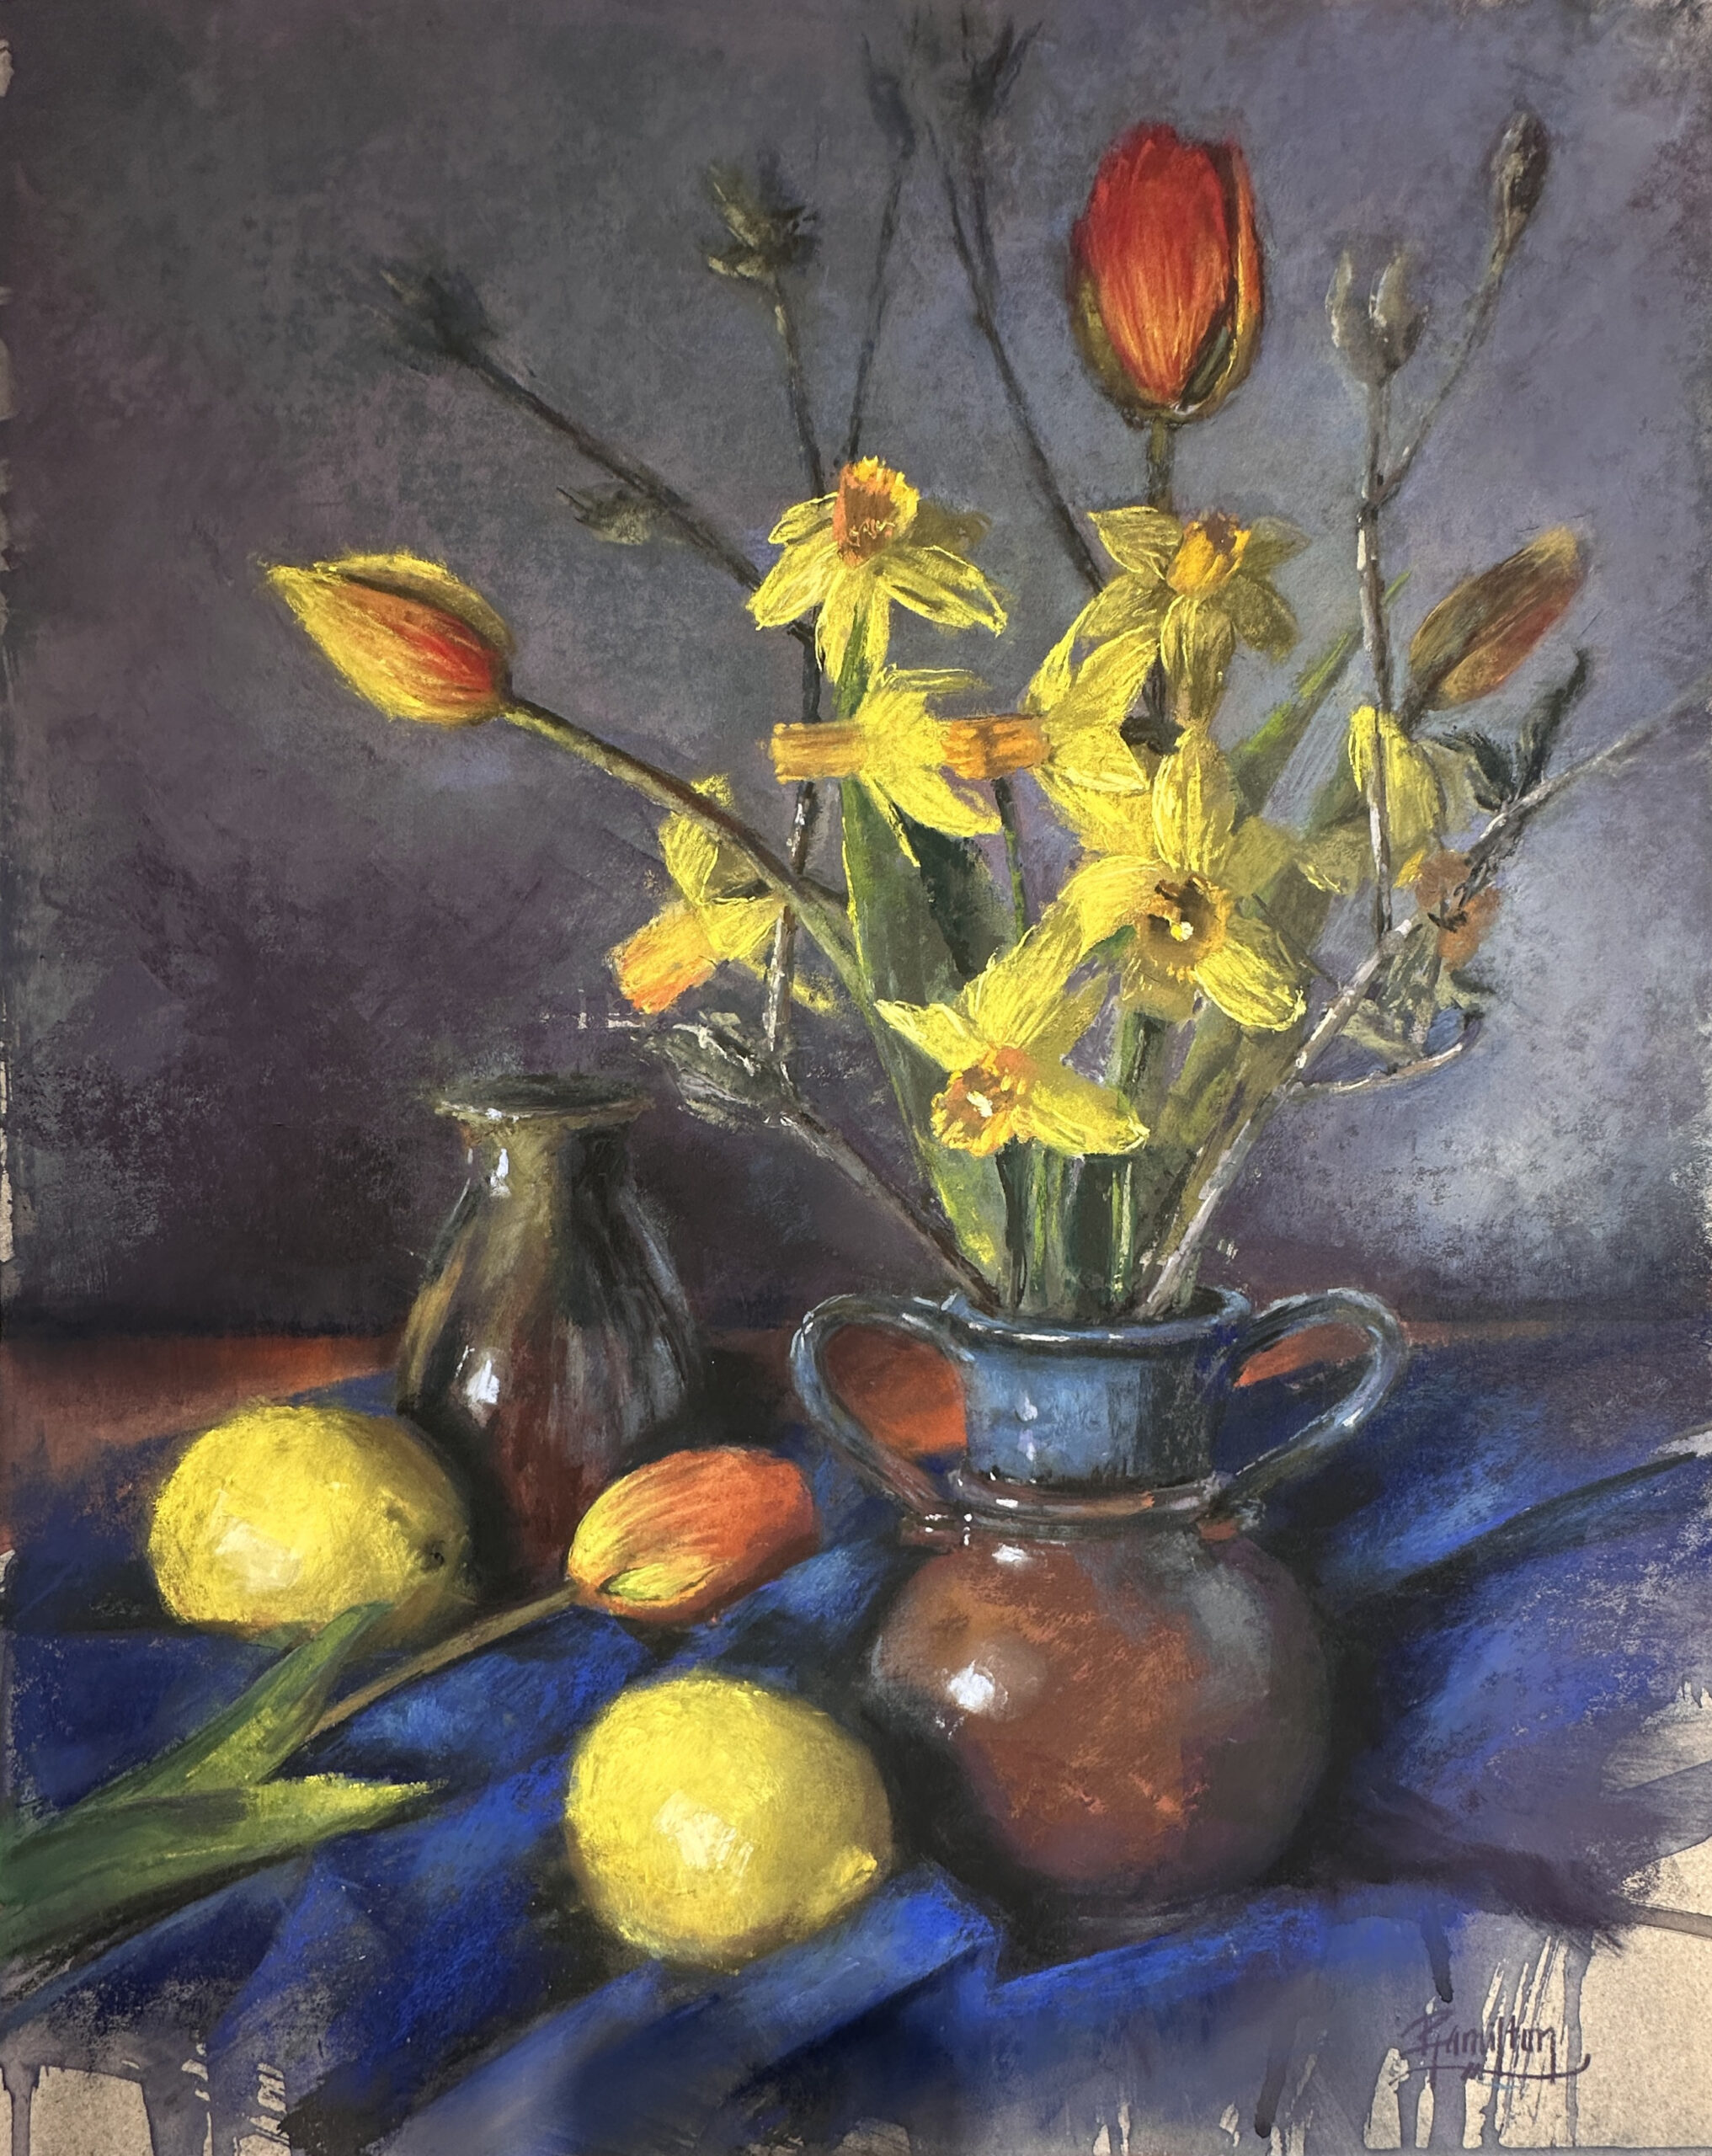 Pastel paintings - Pamela Hamilton, “Spring Blooms and Lemons,” pastel on paper, 20 x 16 in.